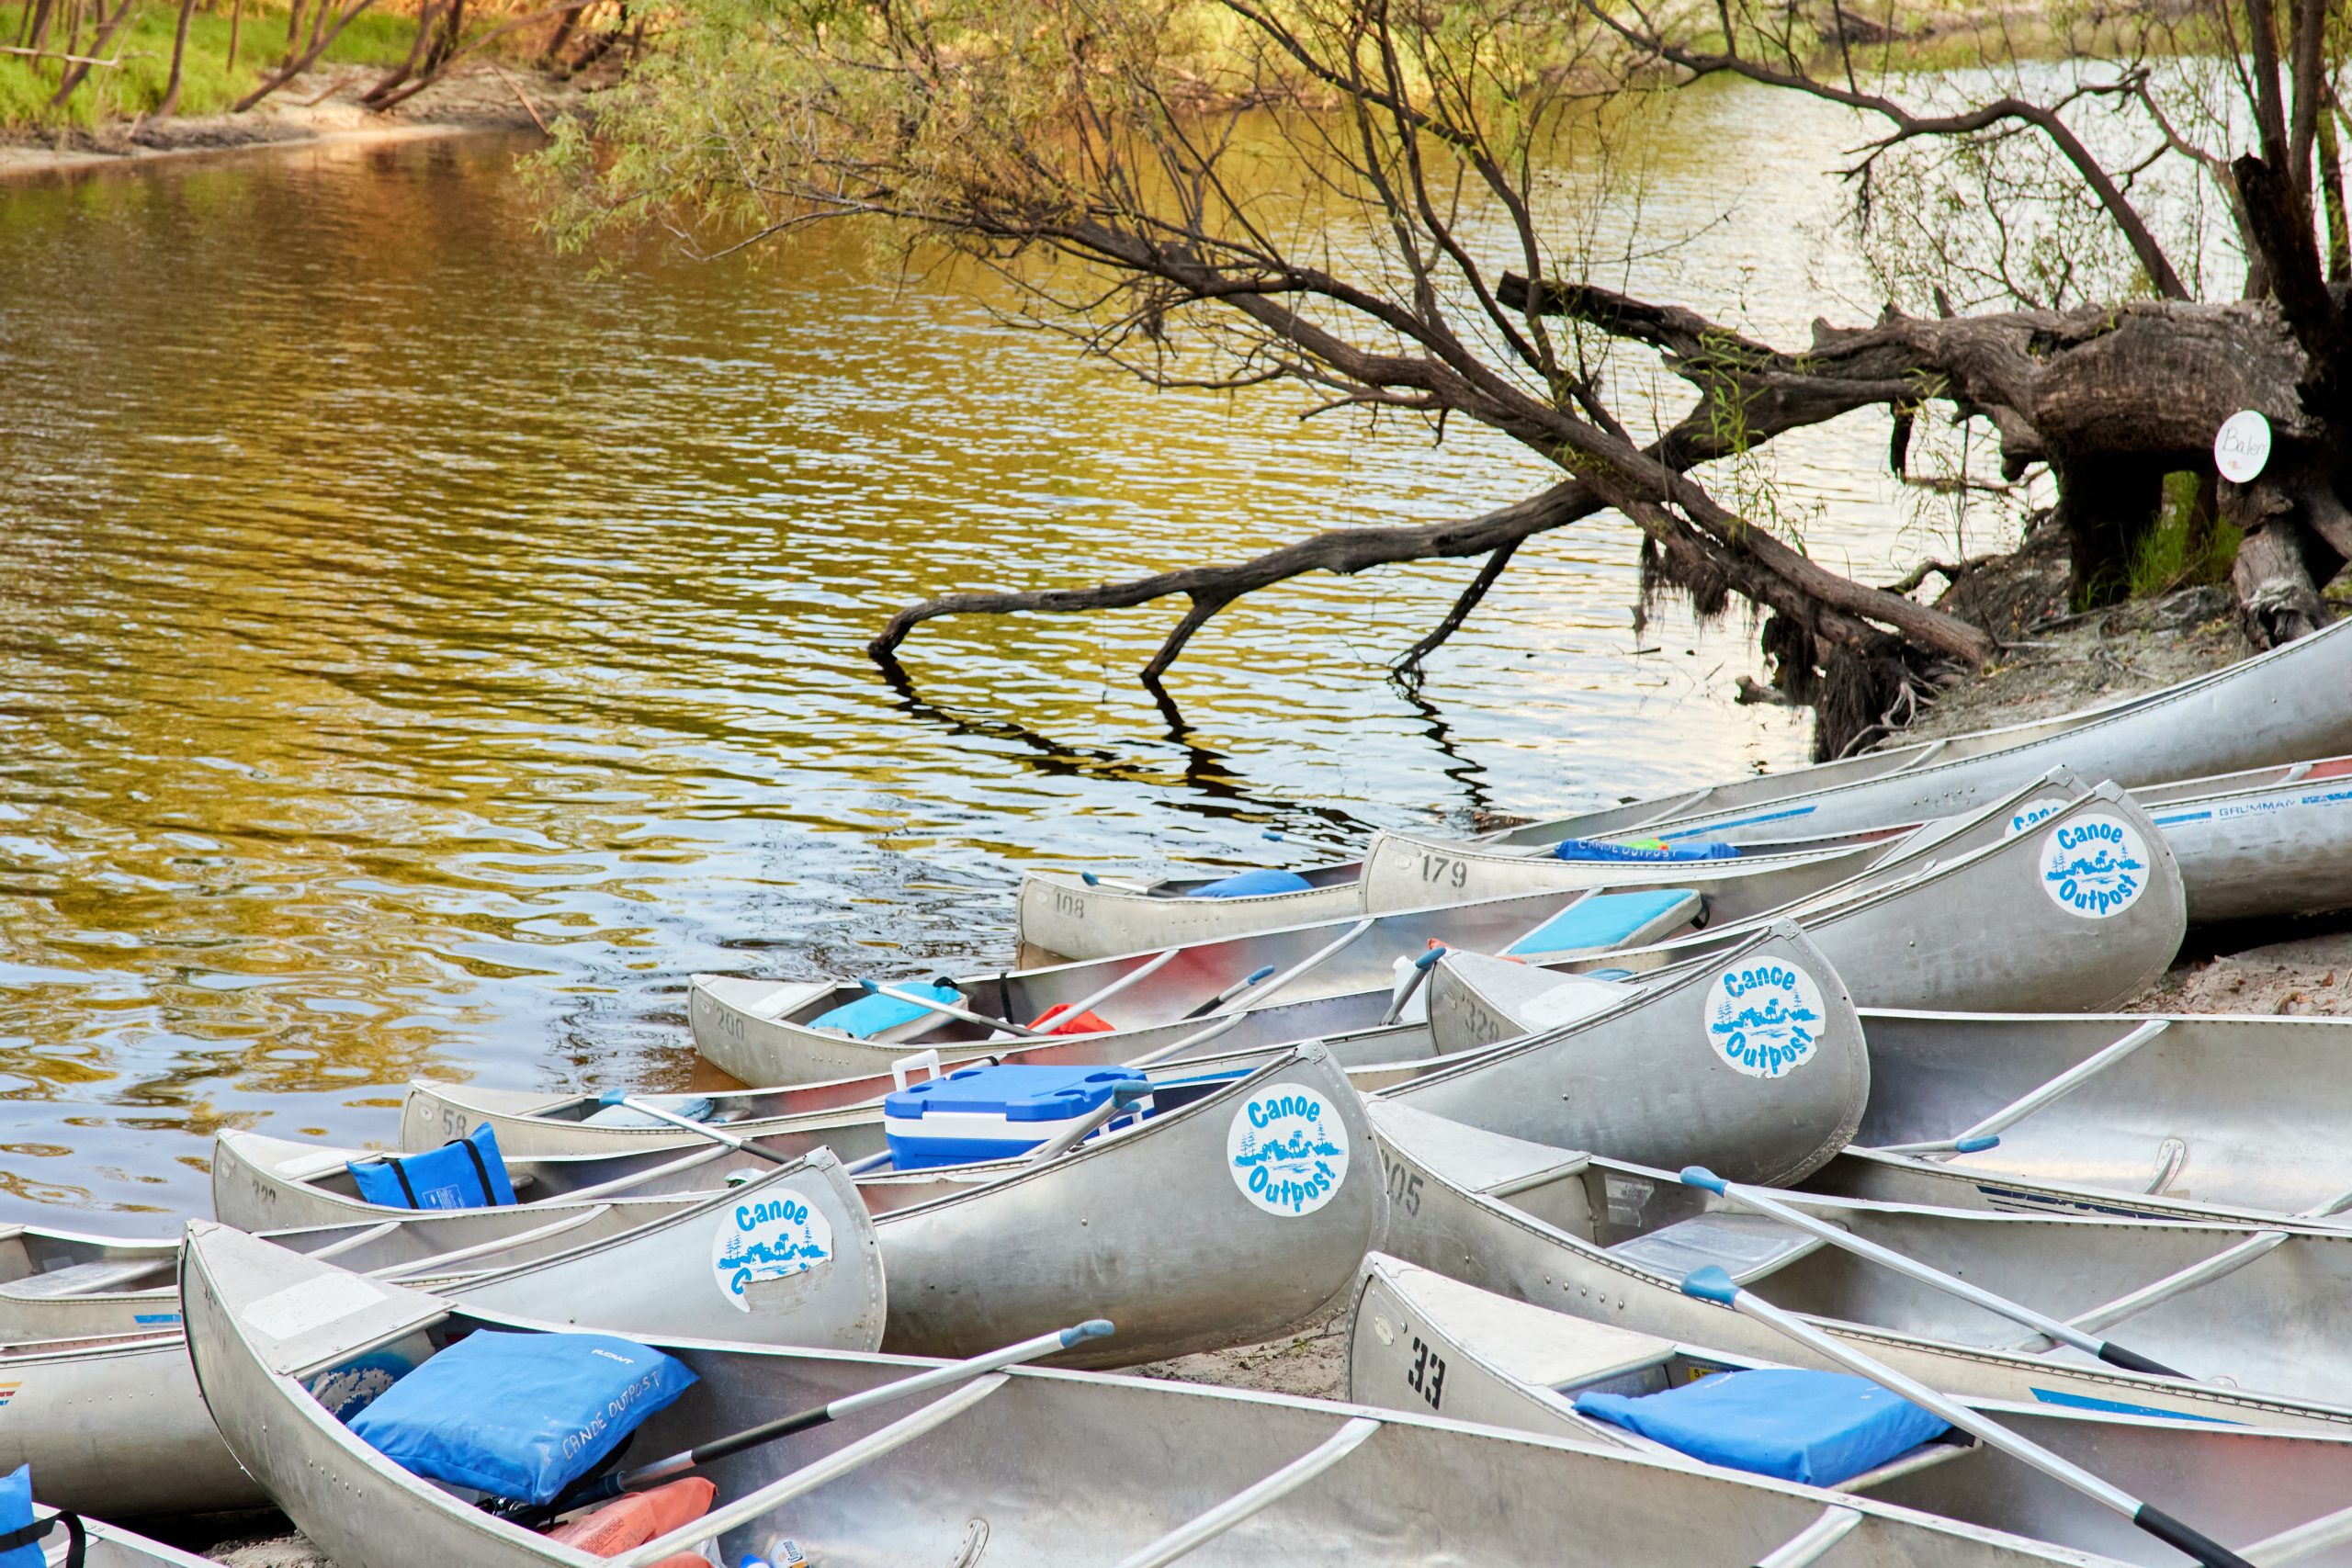 peace river canoe trips florida